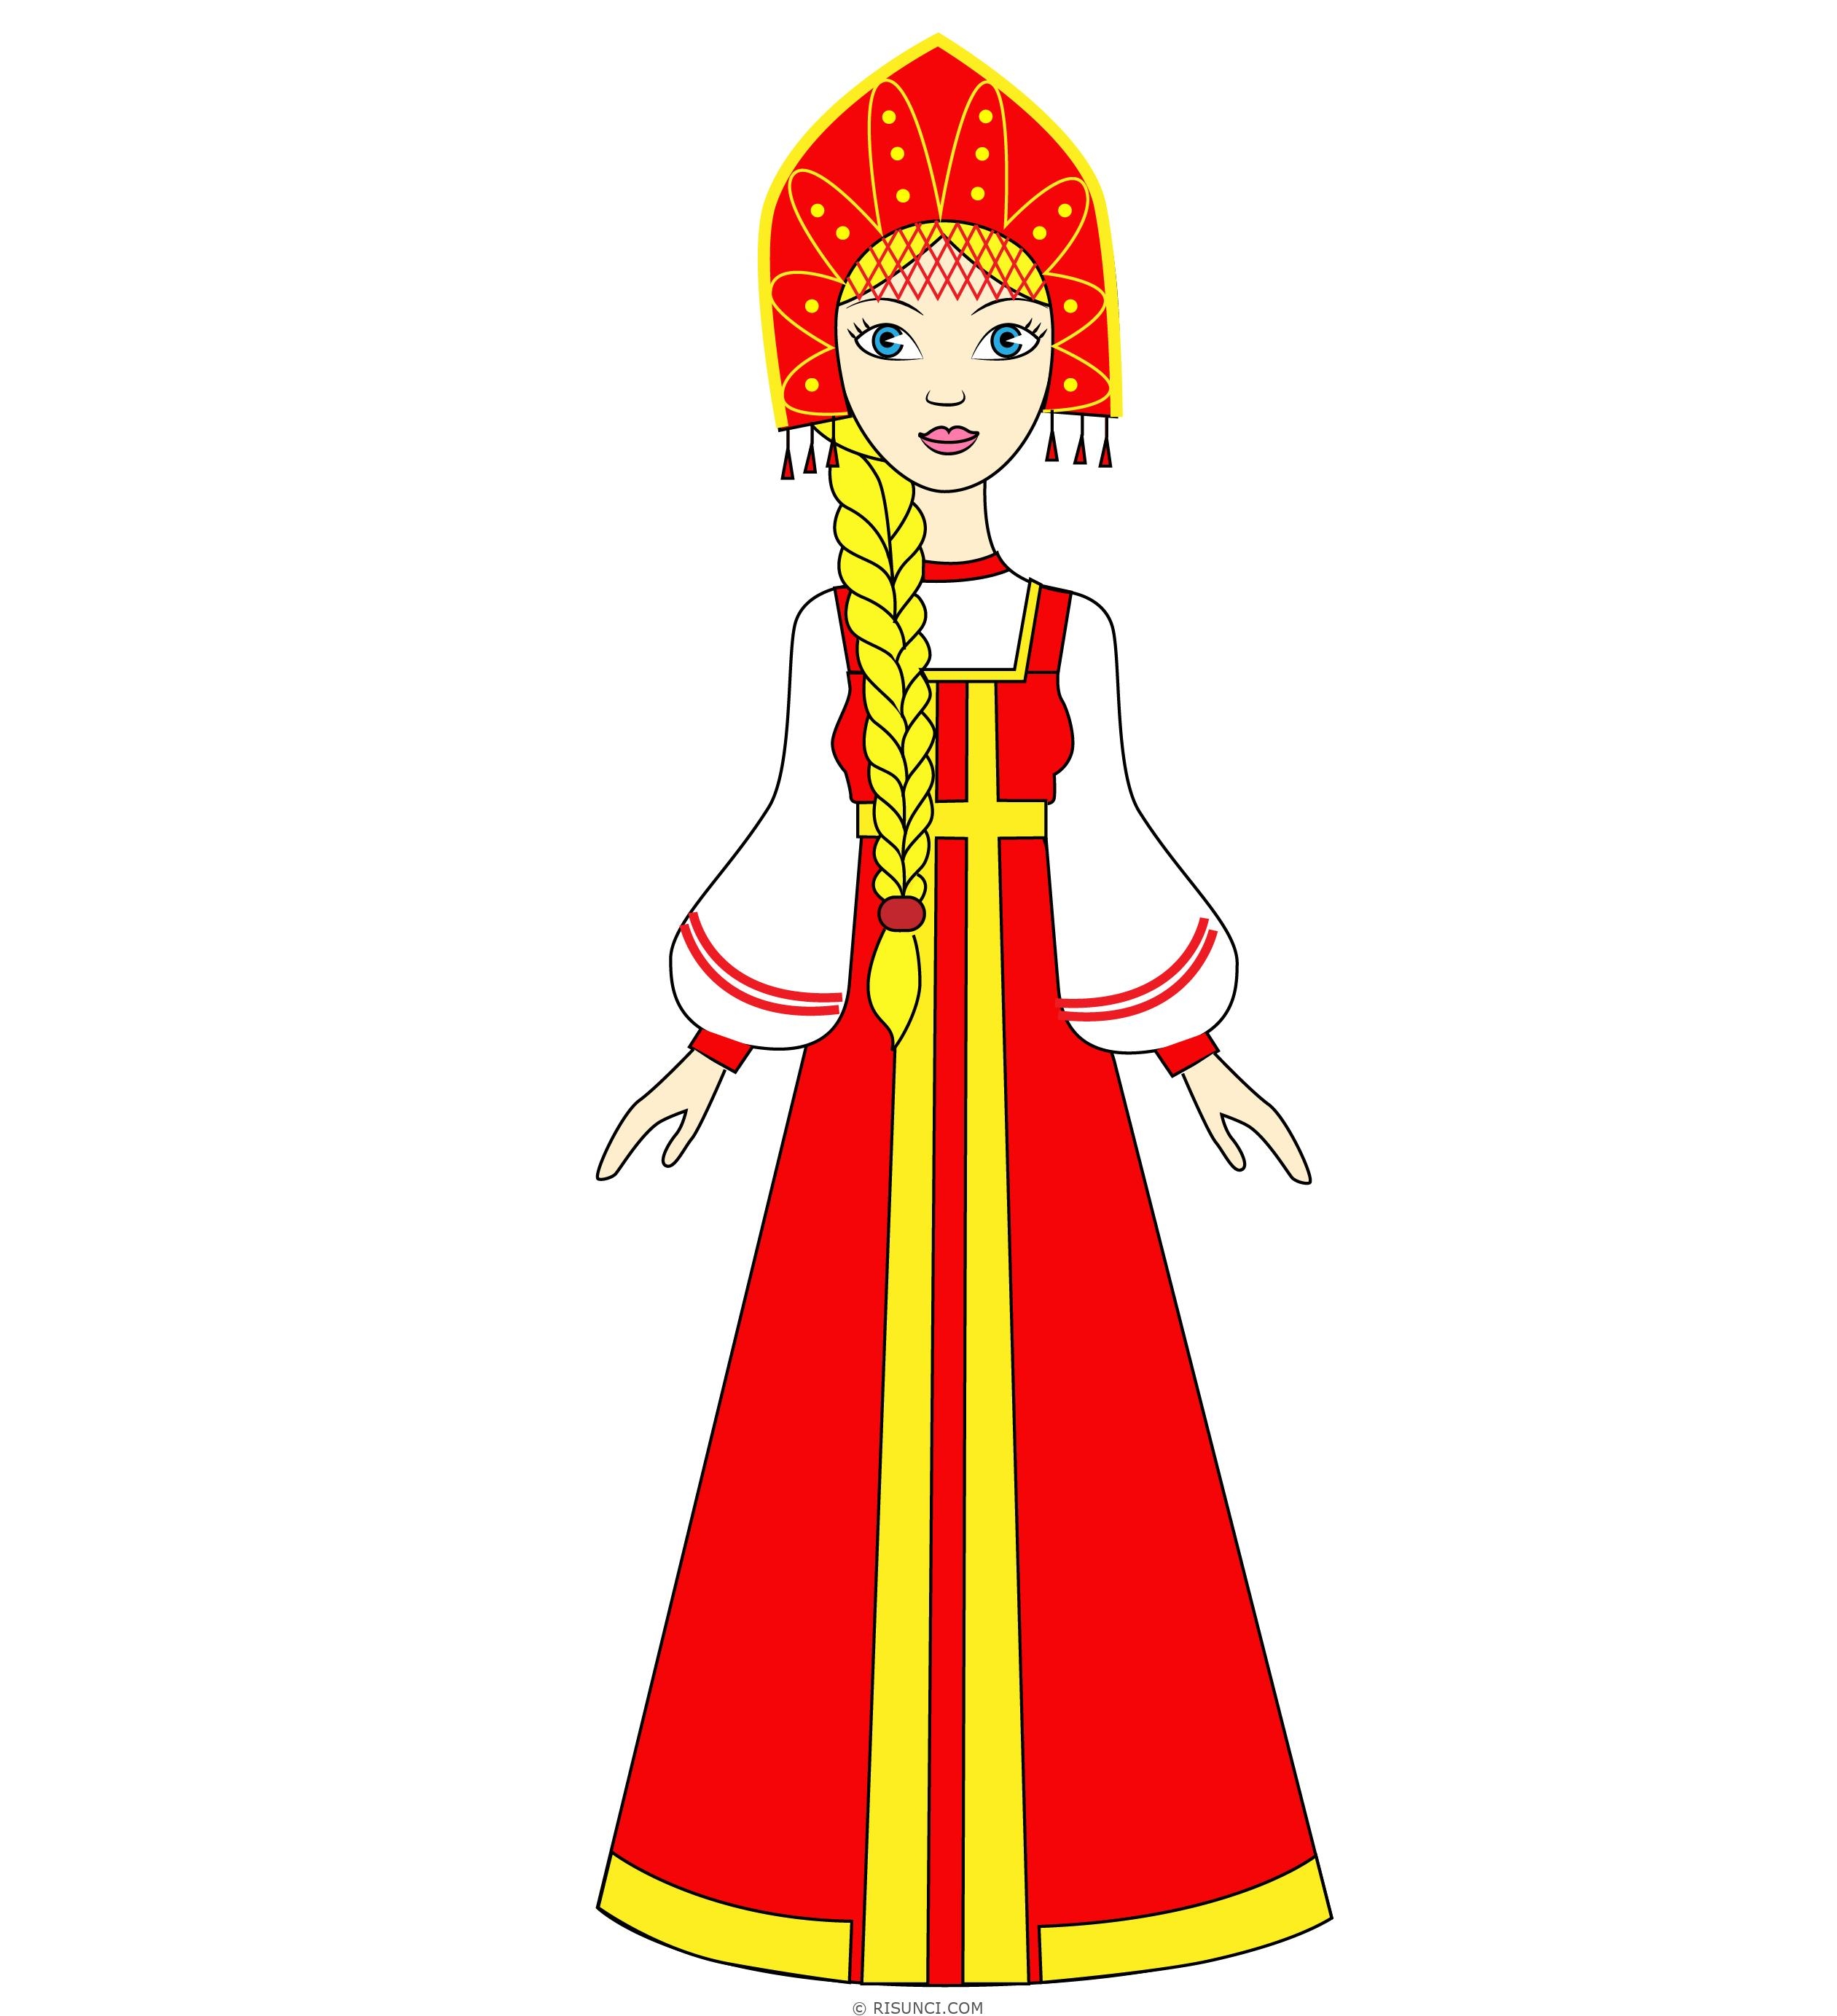 Идеи рисунков для русского народного костюма